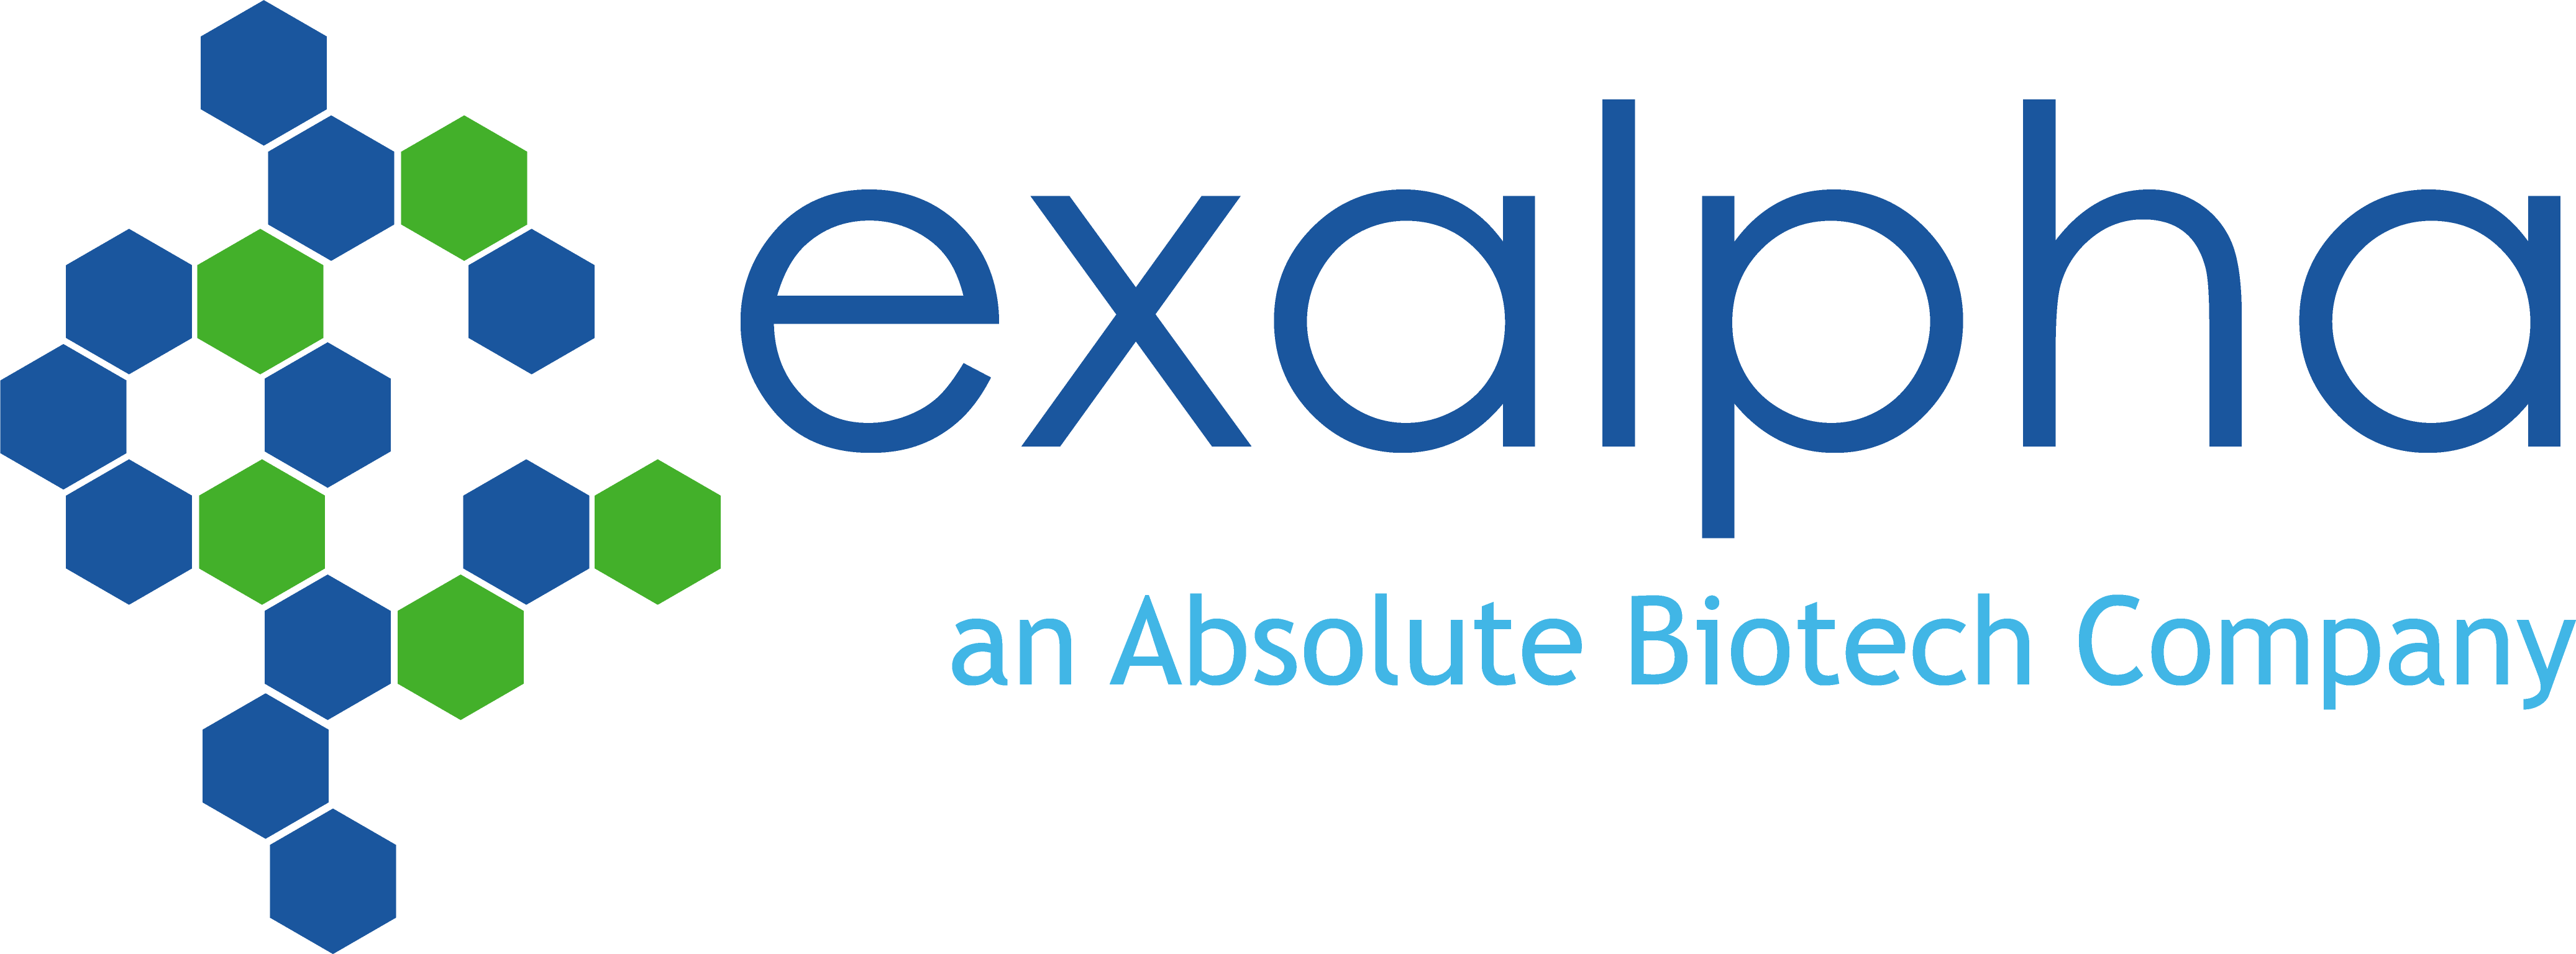 Exalpha Biologicals